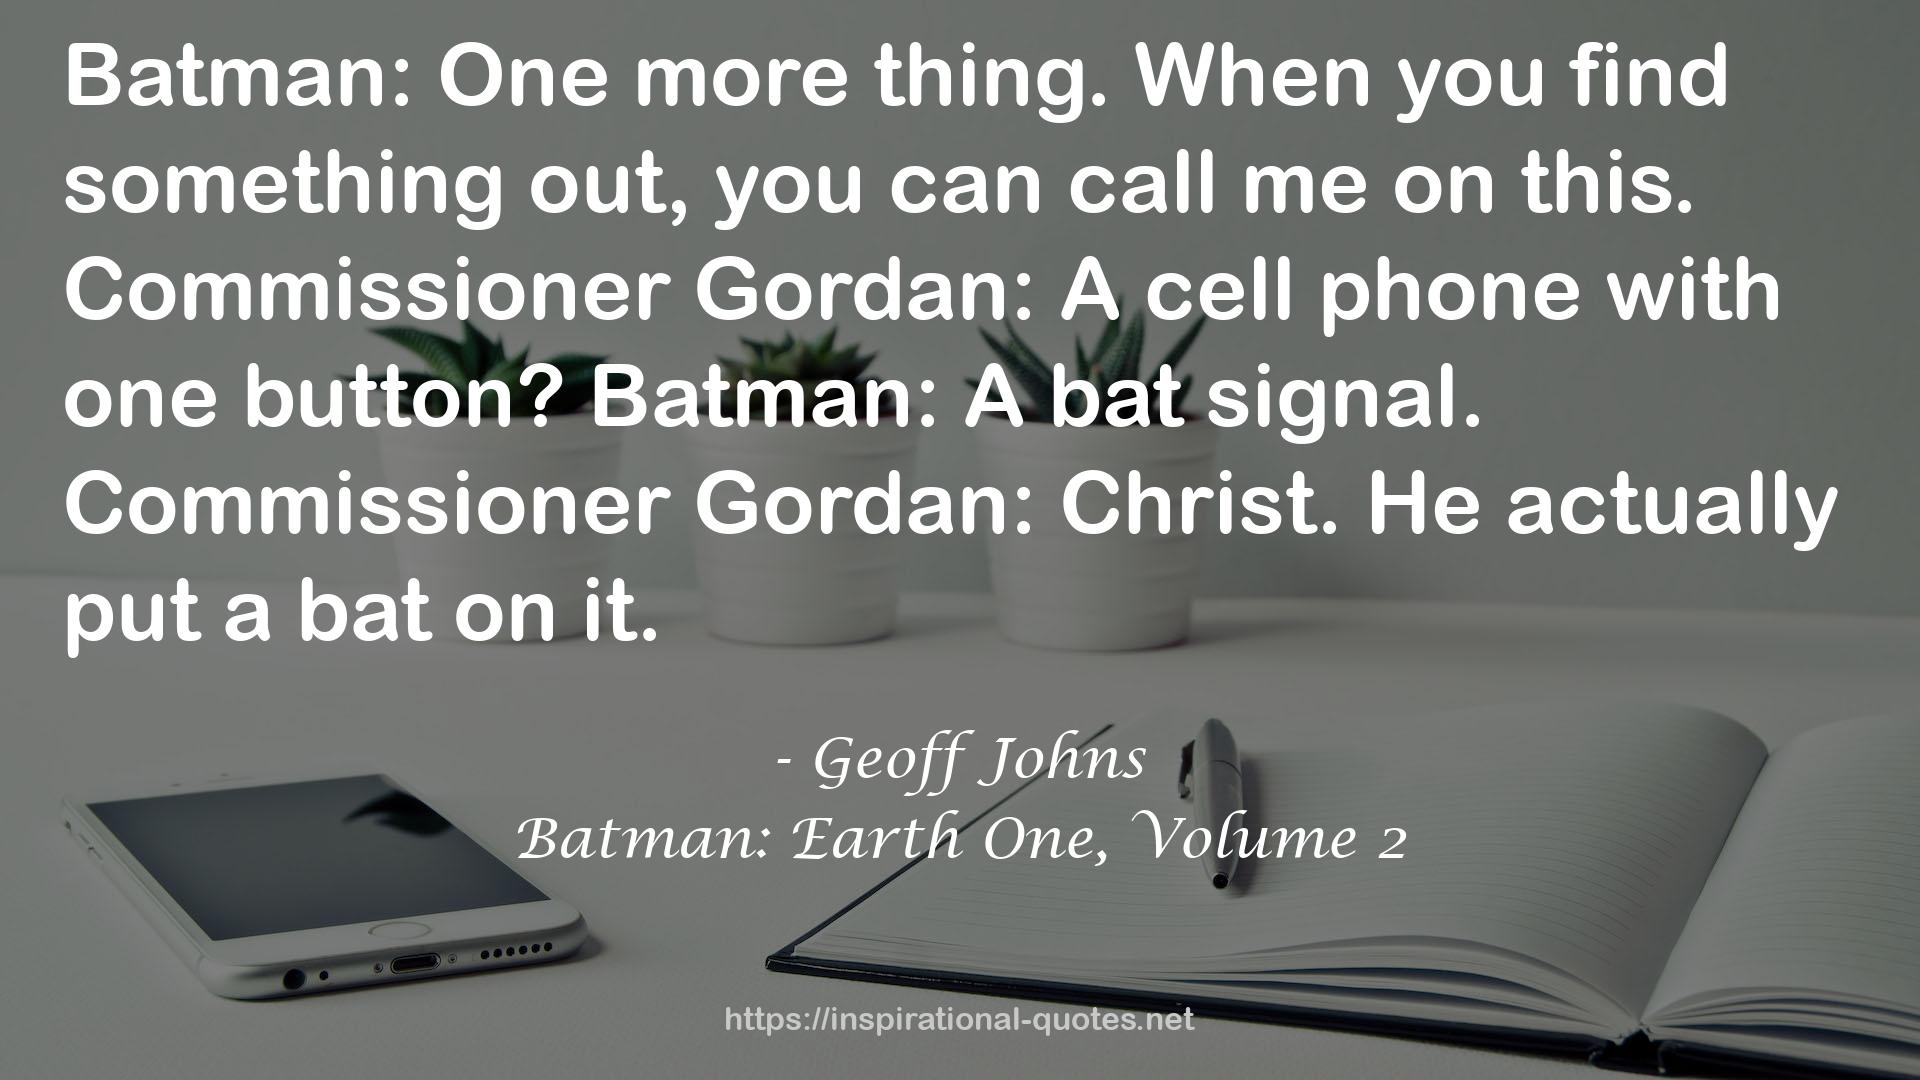 Batman: Earth One, Volume 2 QUOTES